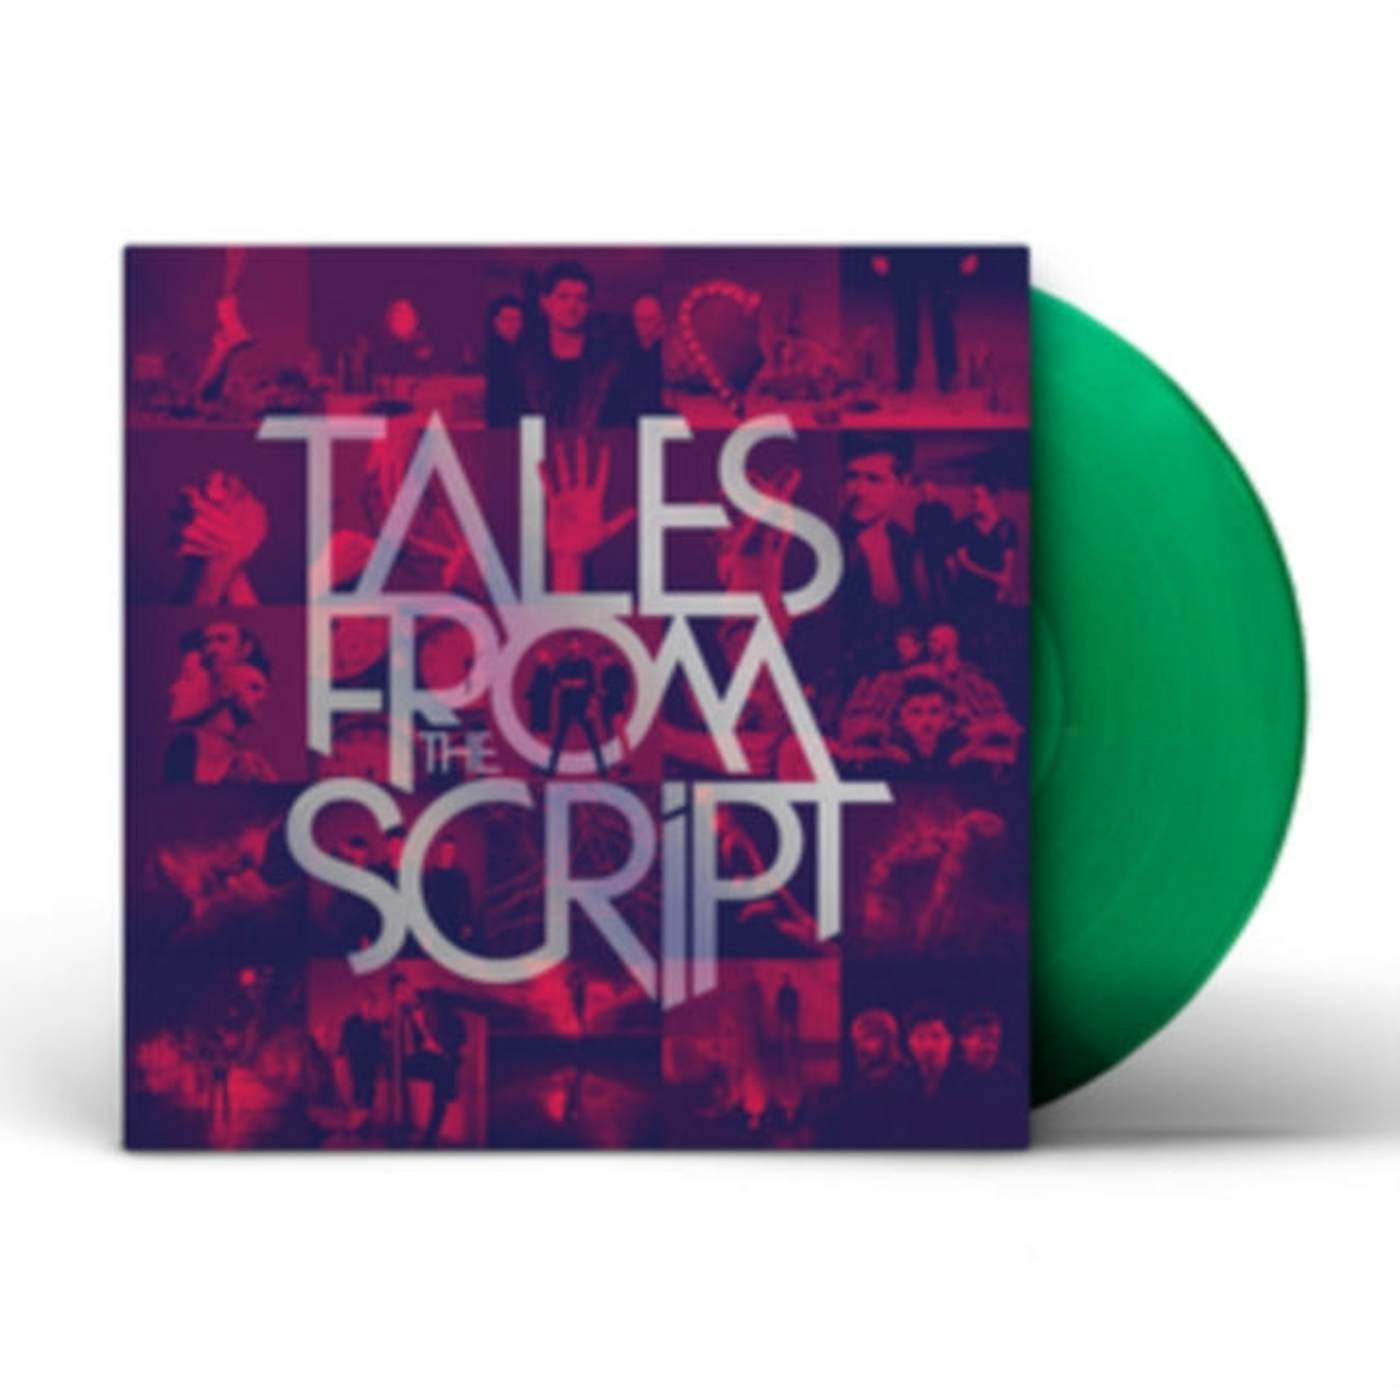 Script LP Vinyl Record - Tales From The Script - Greatest Hits (Green Vinyl)